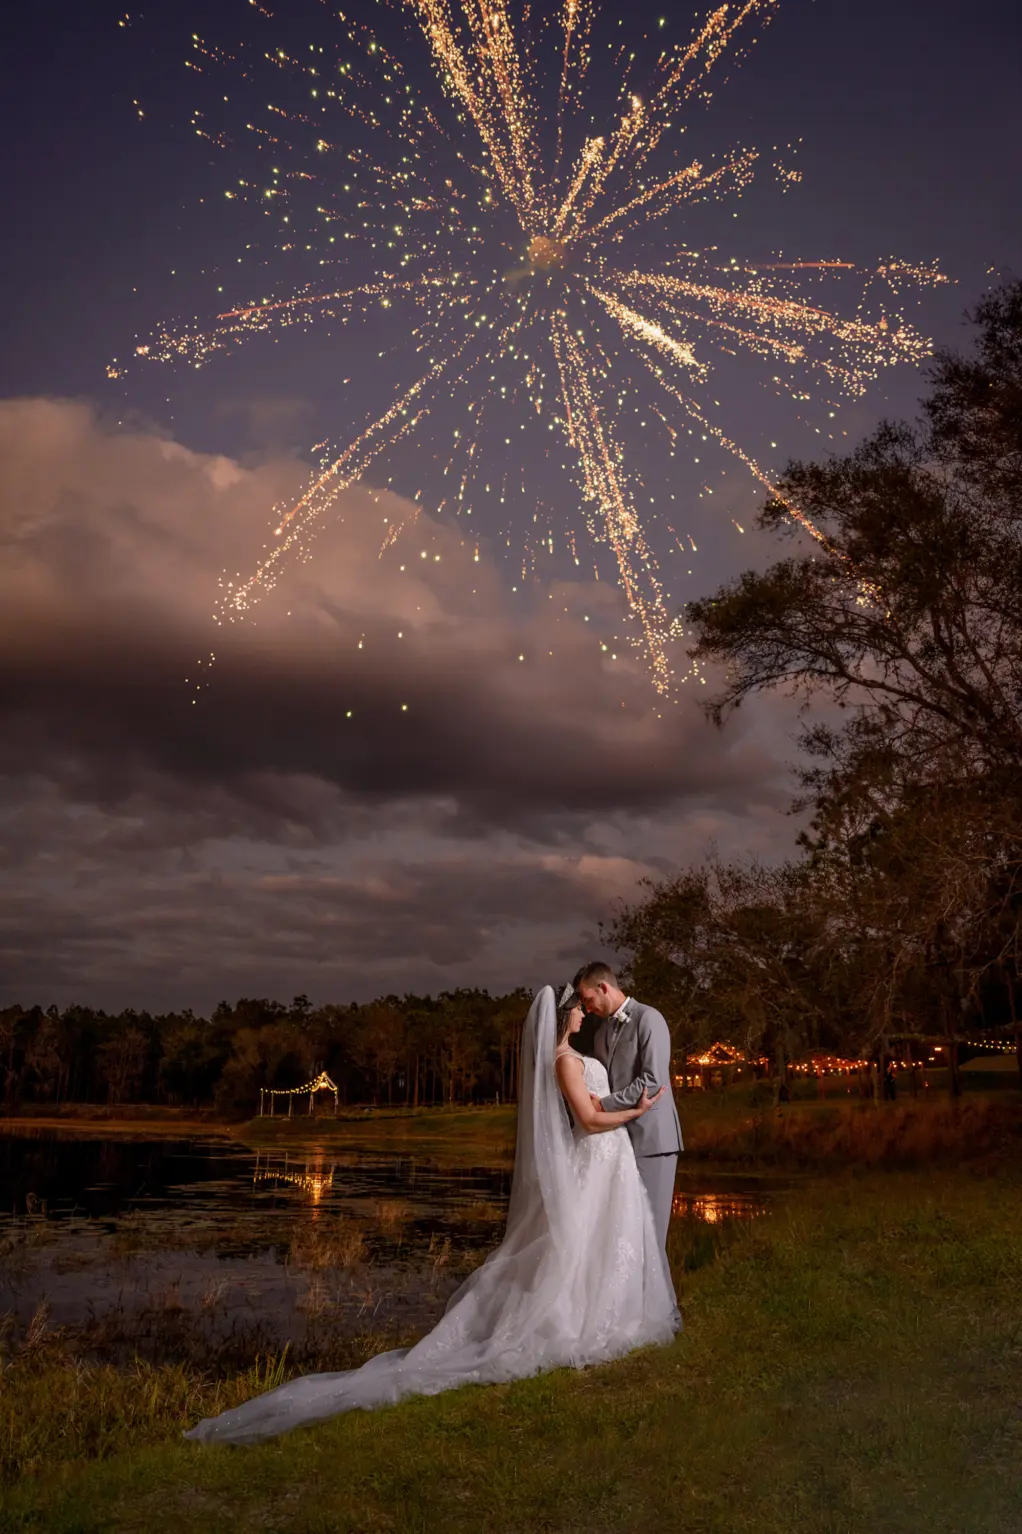 Woodsy Tampa Bay Central Florida Waterfront Wedding Venue Casani Estates